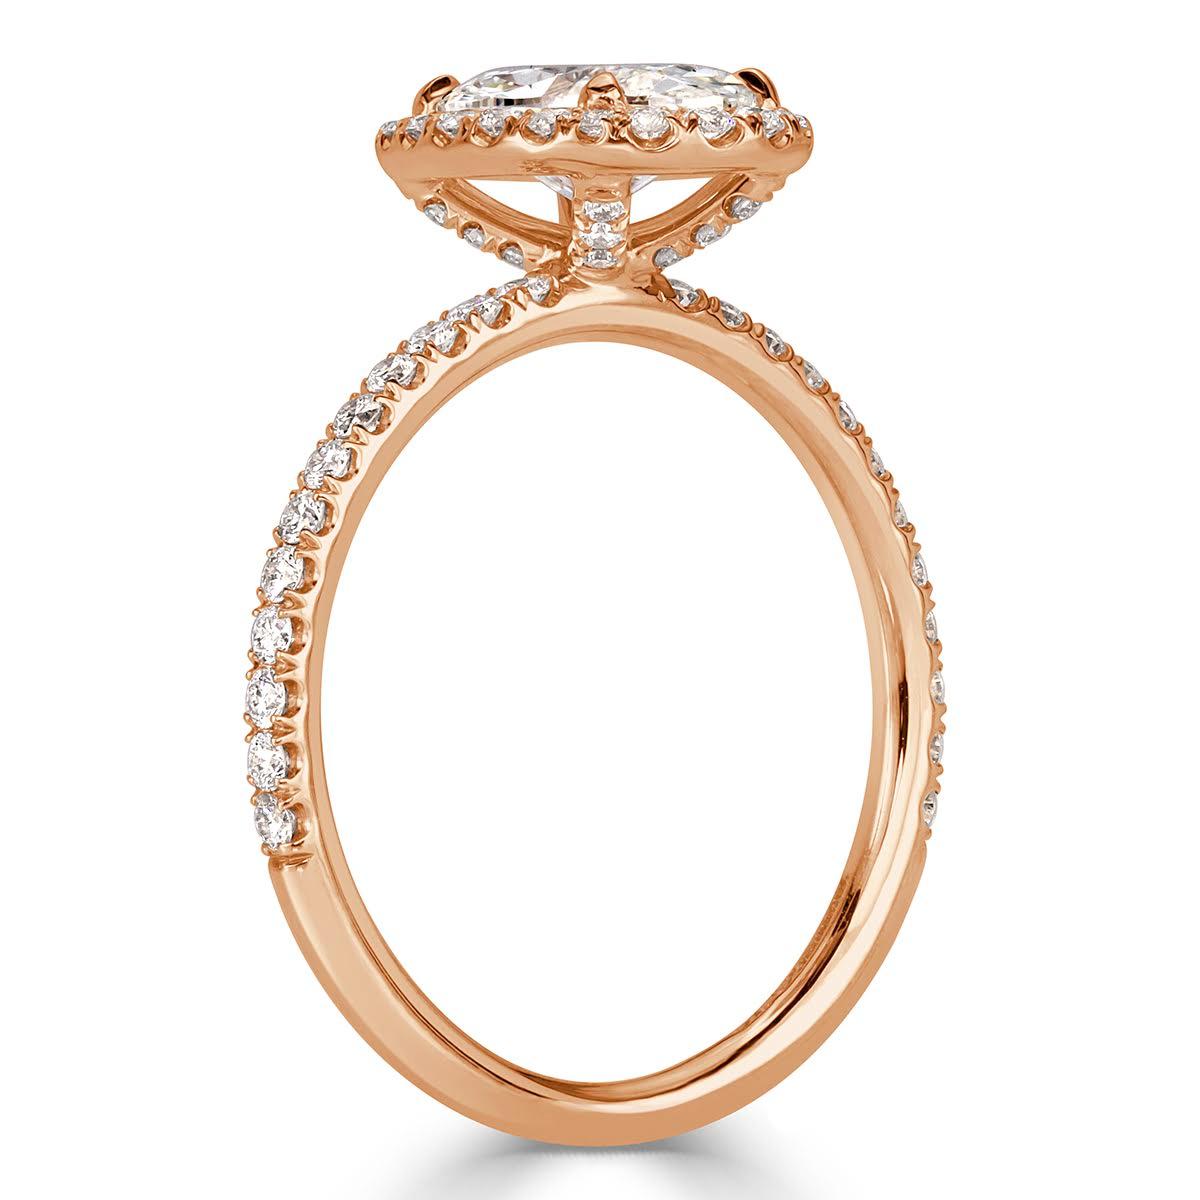 Women's or Men's Mark Broumand 1.69 Carat Oval Cut Diamond Engagement Ring